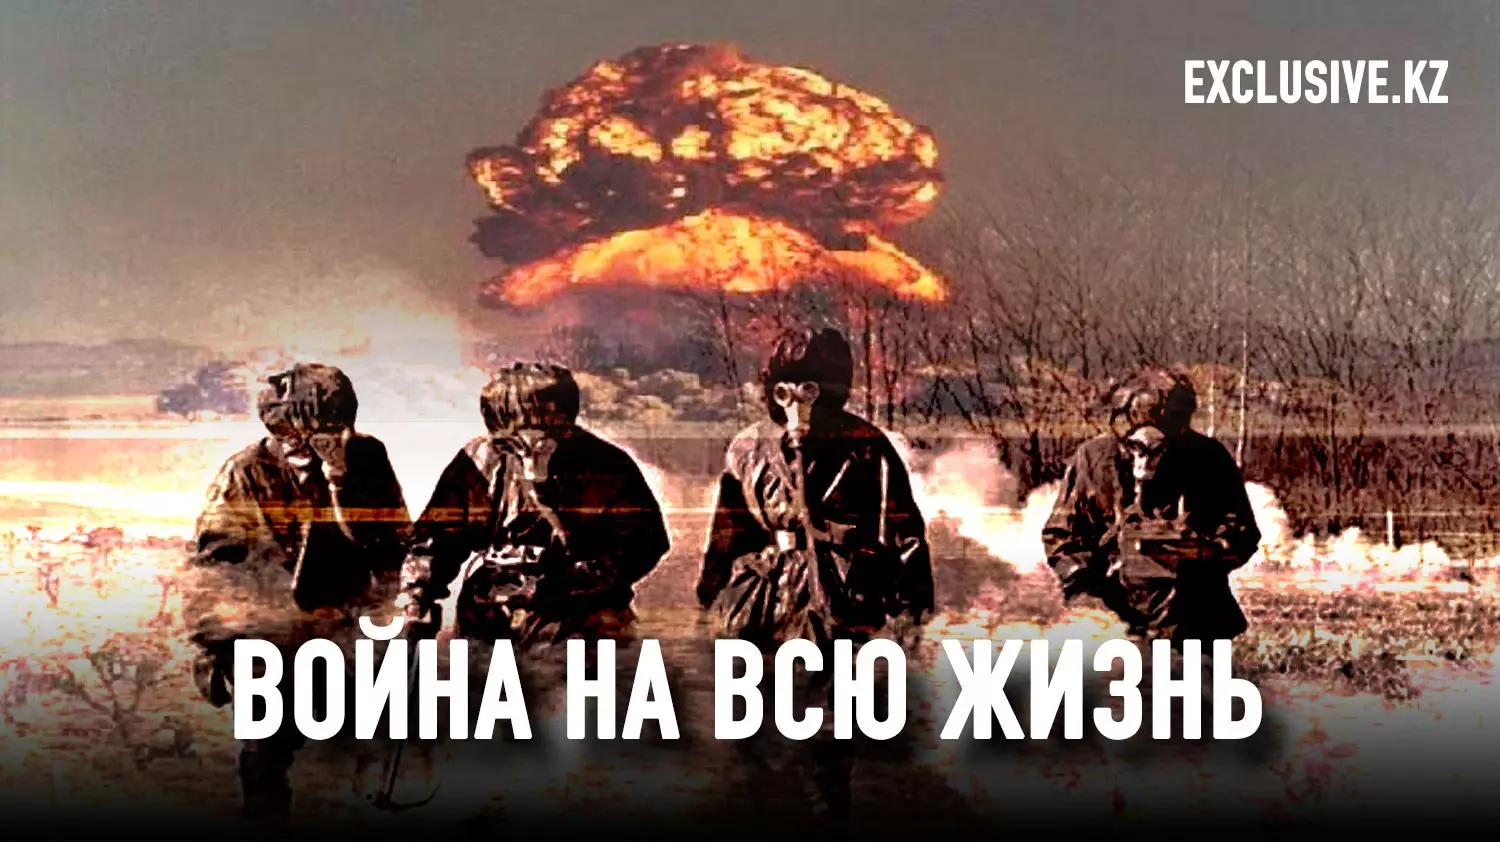 Сможет ли «Жана Казахстан» услышать атомных солдат